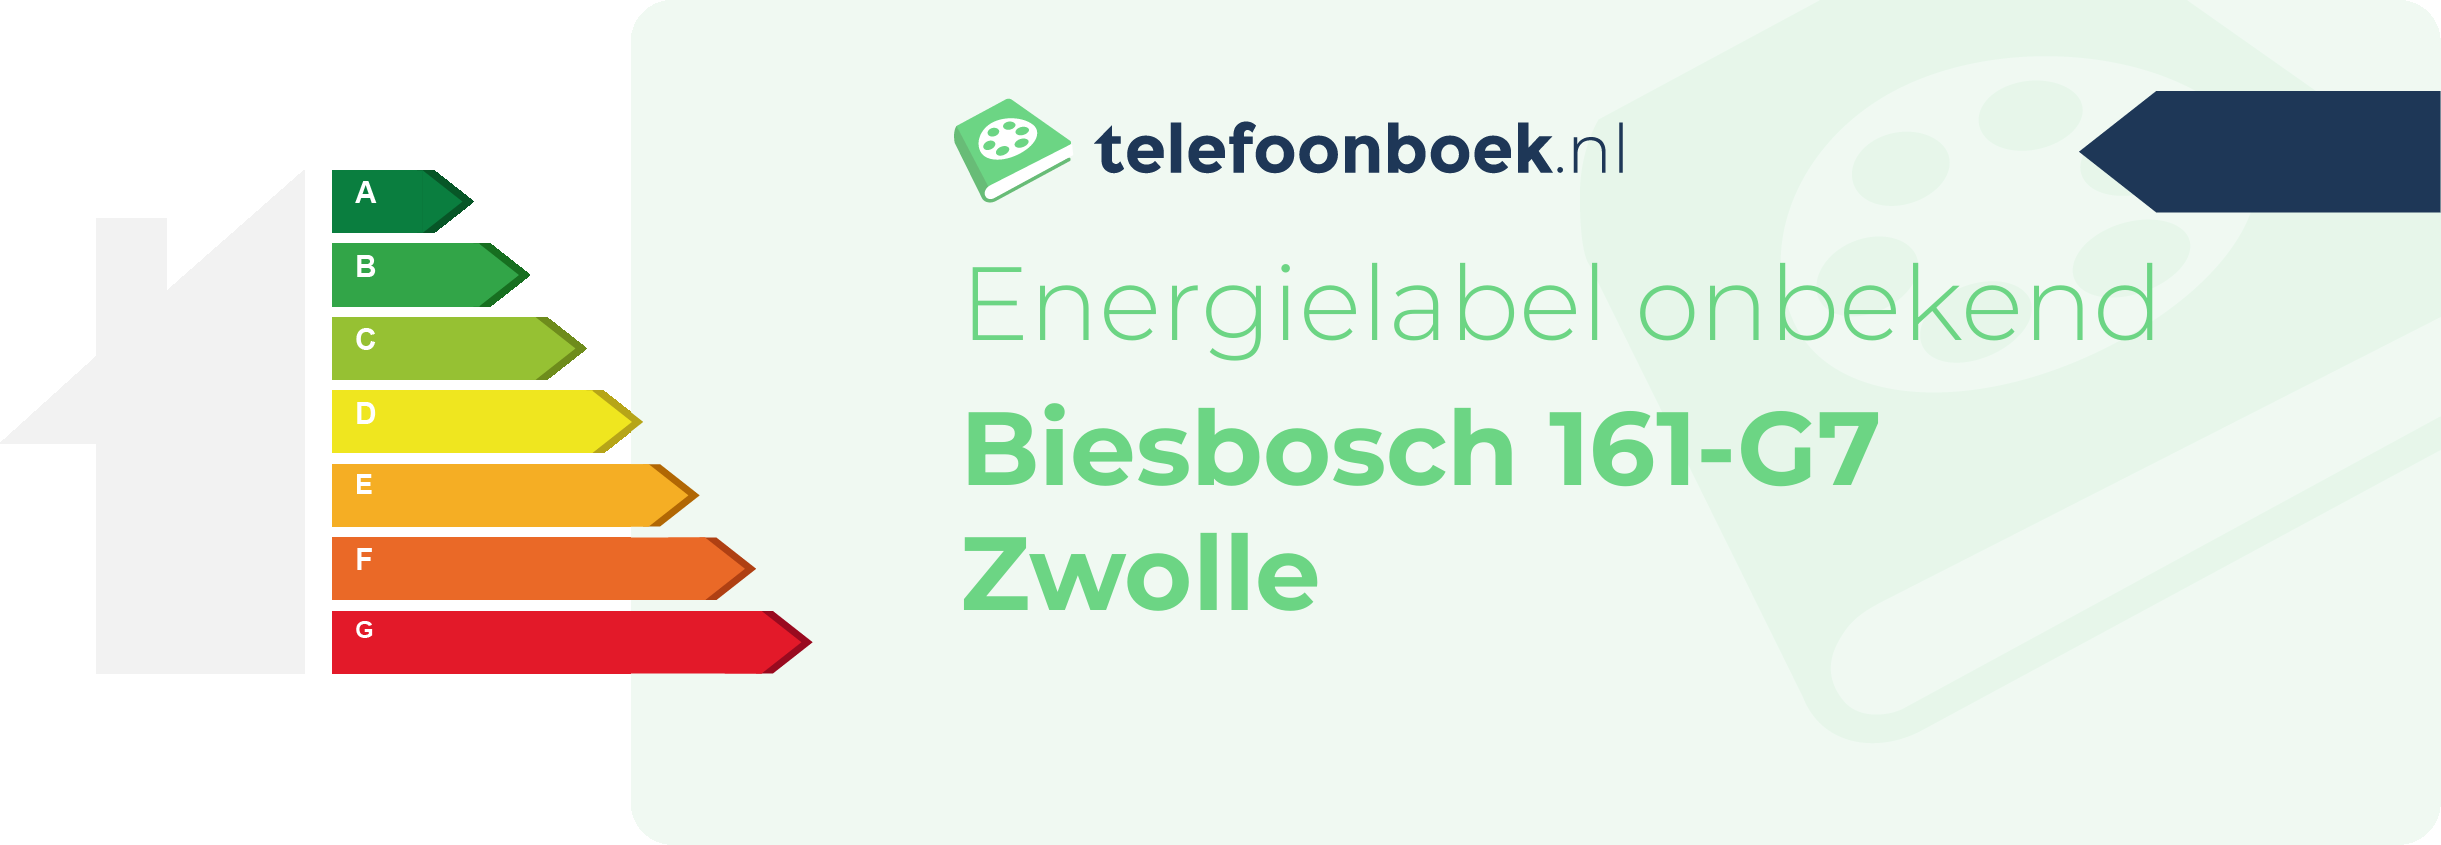 Energielabel Biesbosch 161-G7 Zwolle